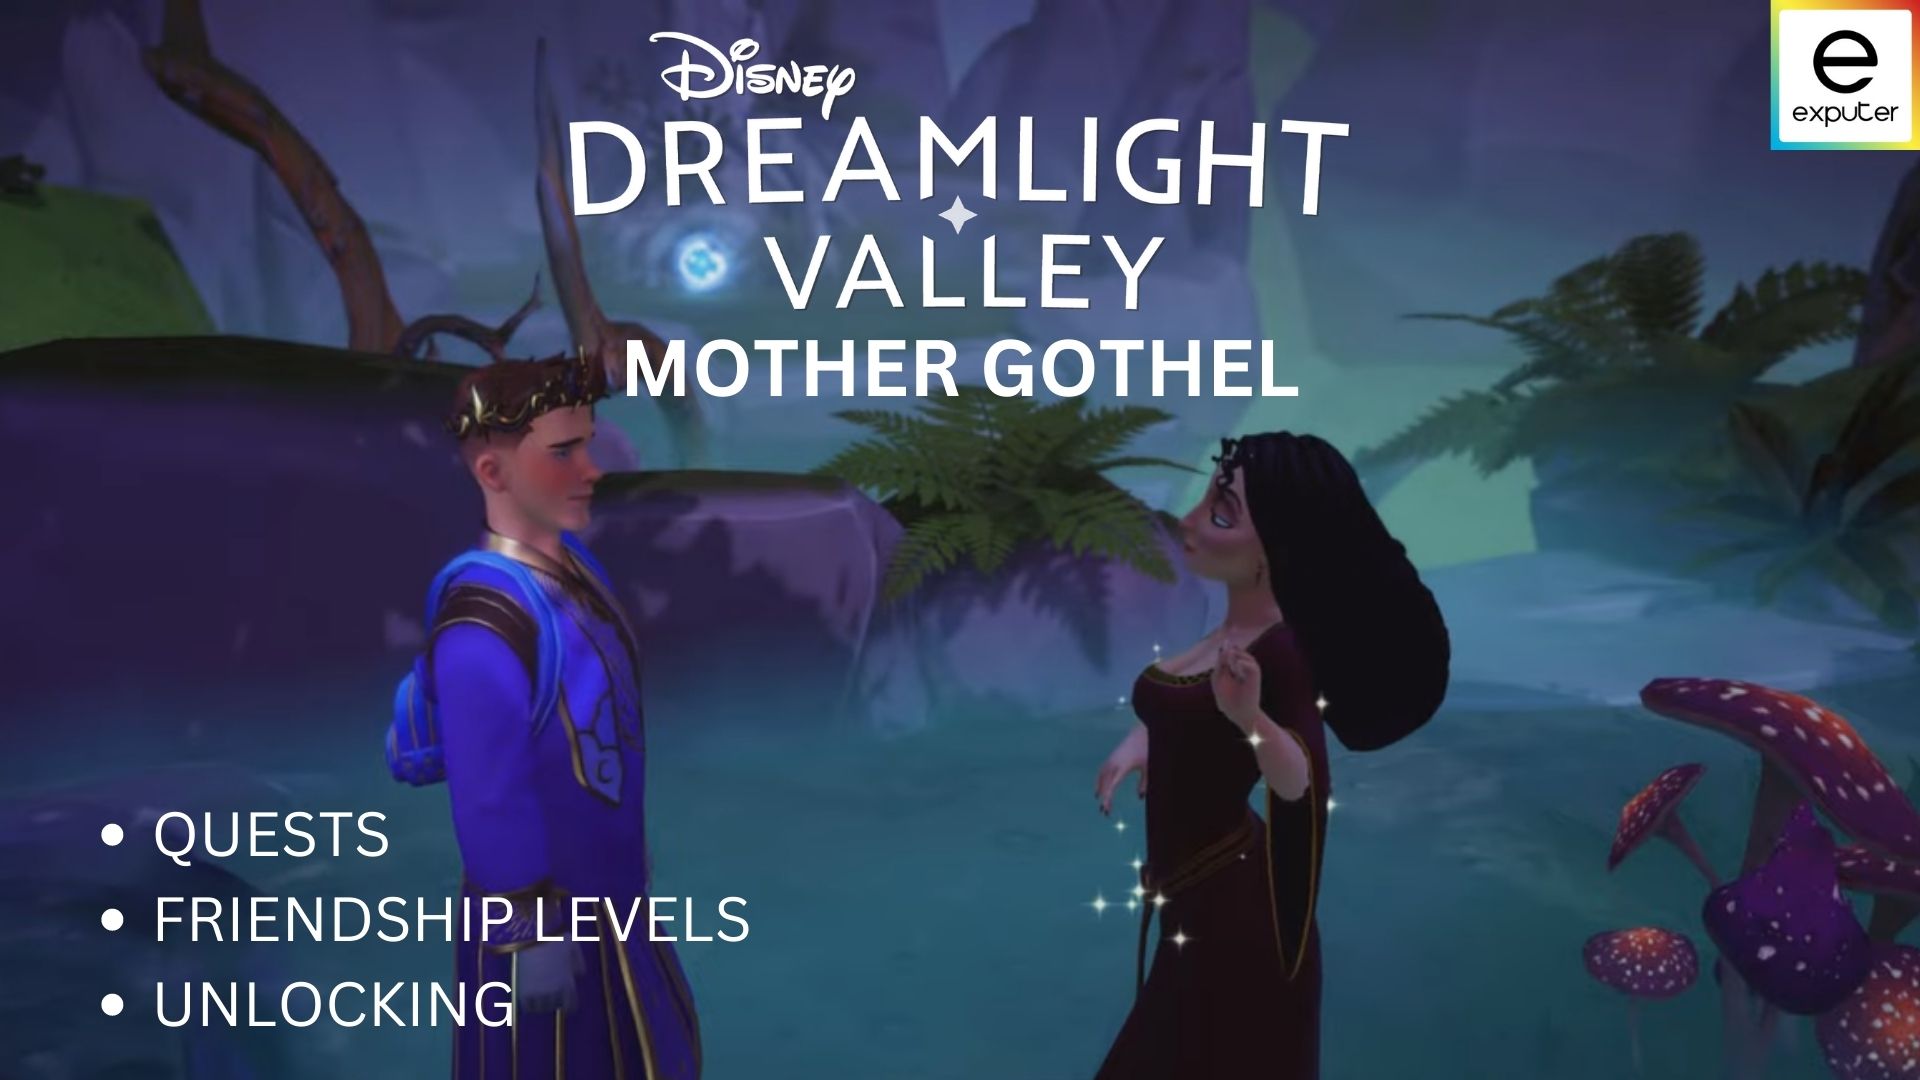 Disney Dreamlight Valley Mother Gothel: Full Guide 